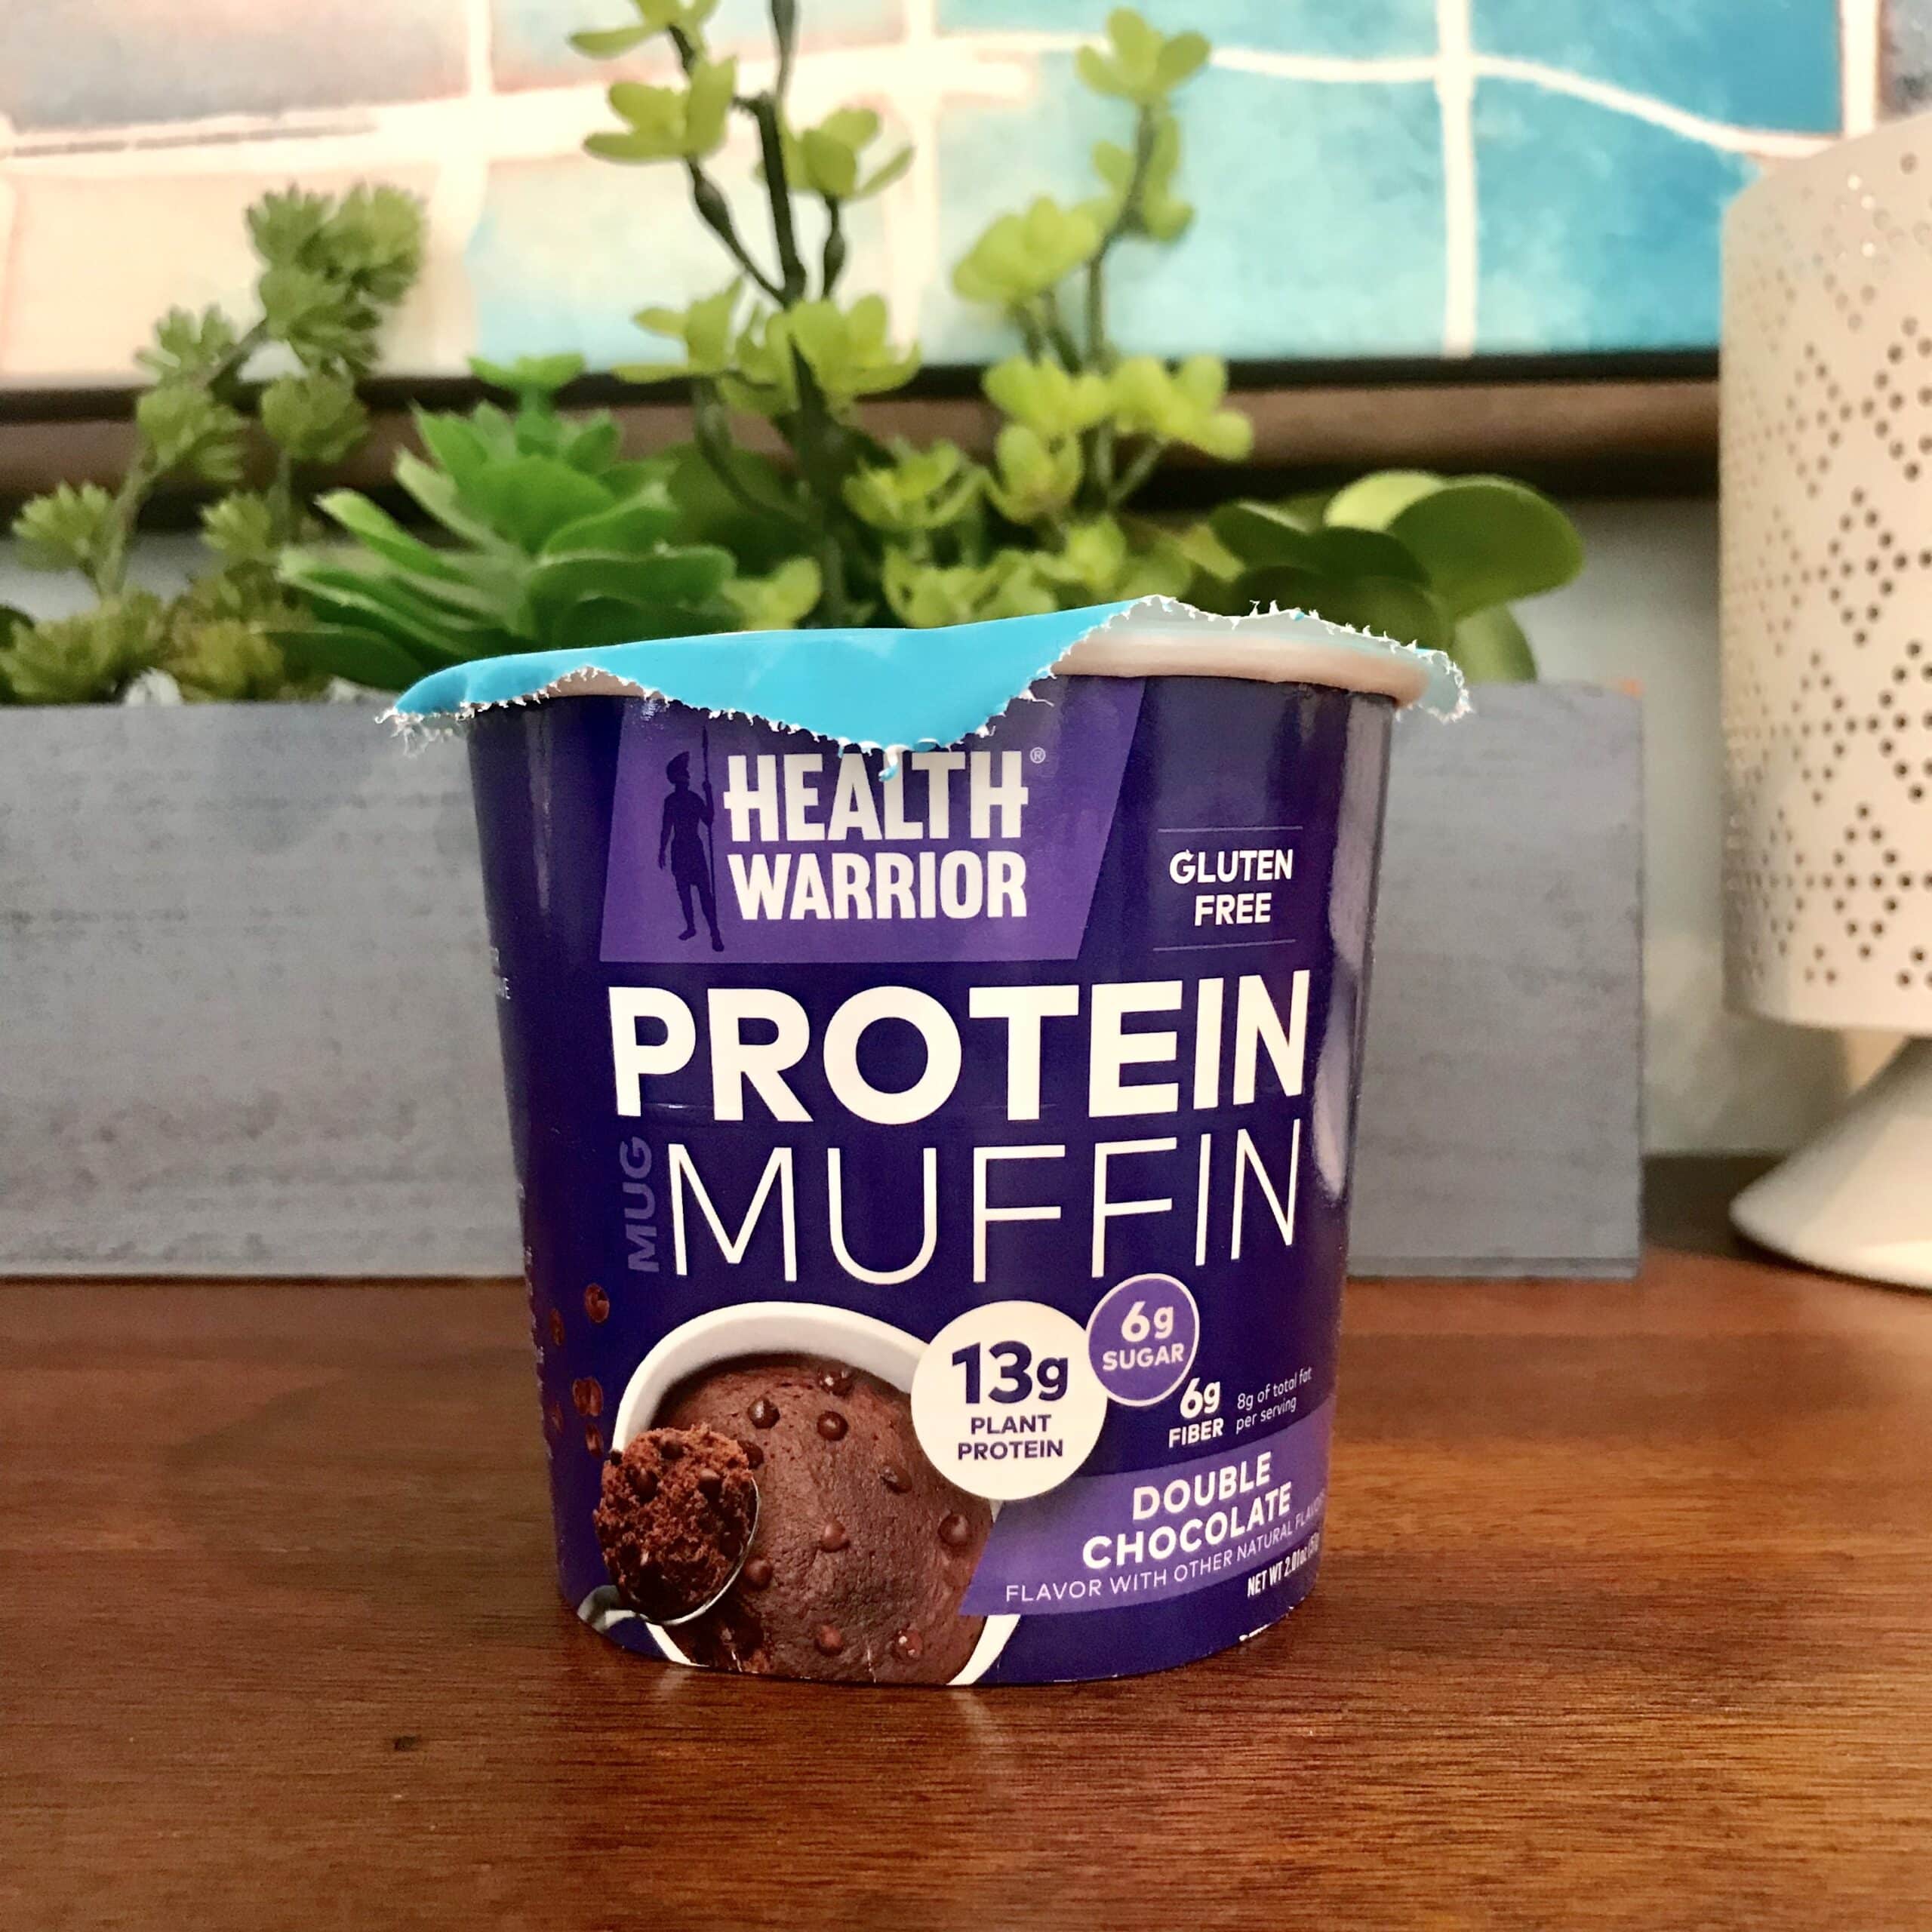 Double Chocolate Protein Muffin from Health Warrior gluten-free